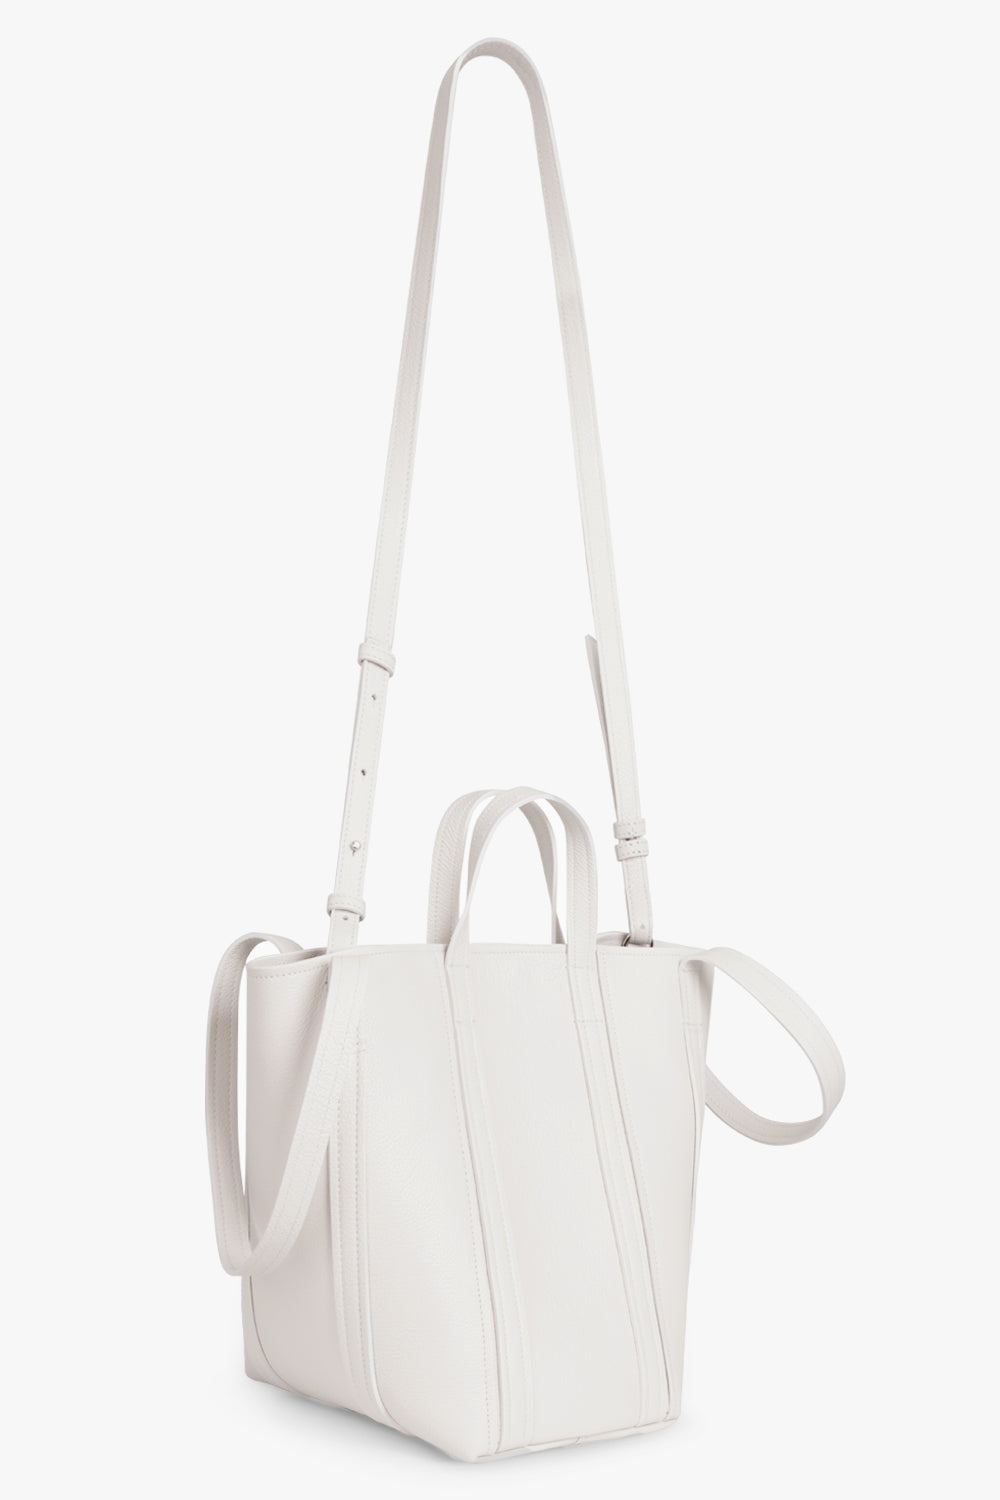 BALENCIAGA BAGS WHITE EVERYDAY 2.0 SMALL N/S SHOPPING TOTE | CHALKY WHITE